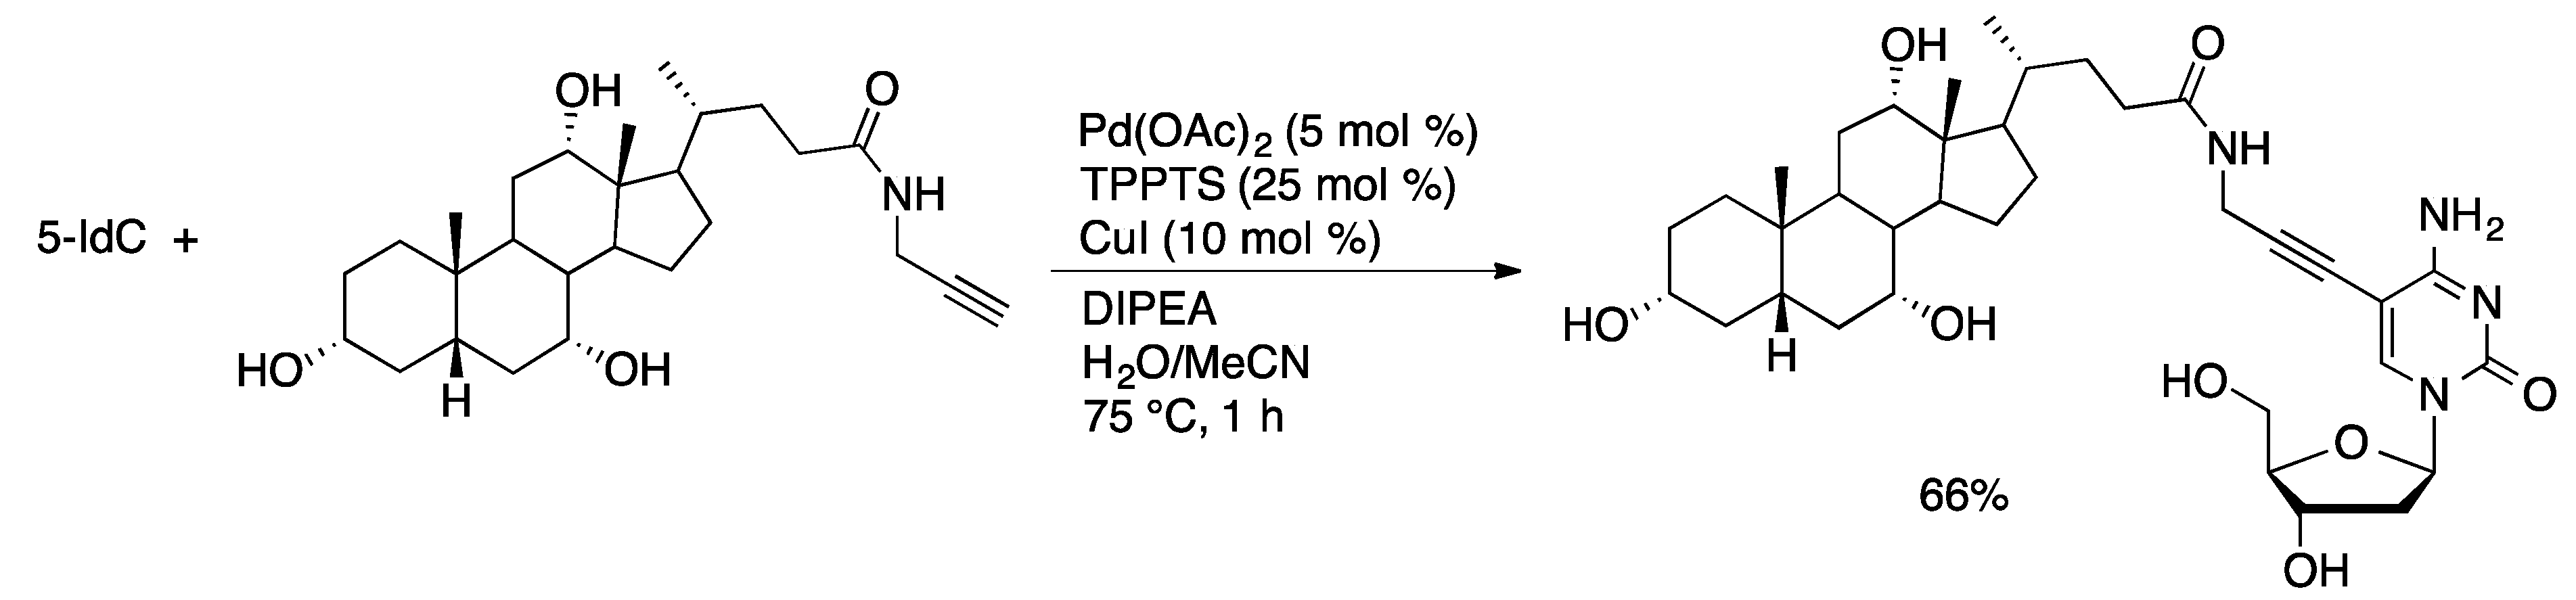 Molecules | Free Full-Text | Palladium-Catalyzed Modification of  Unprotected Nucleosides, Nucleotides, and Oligonucleotides | HTML